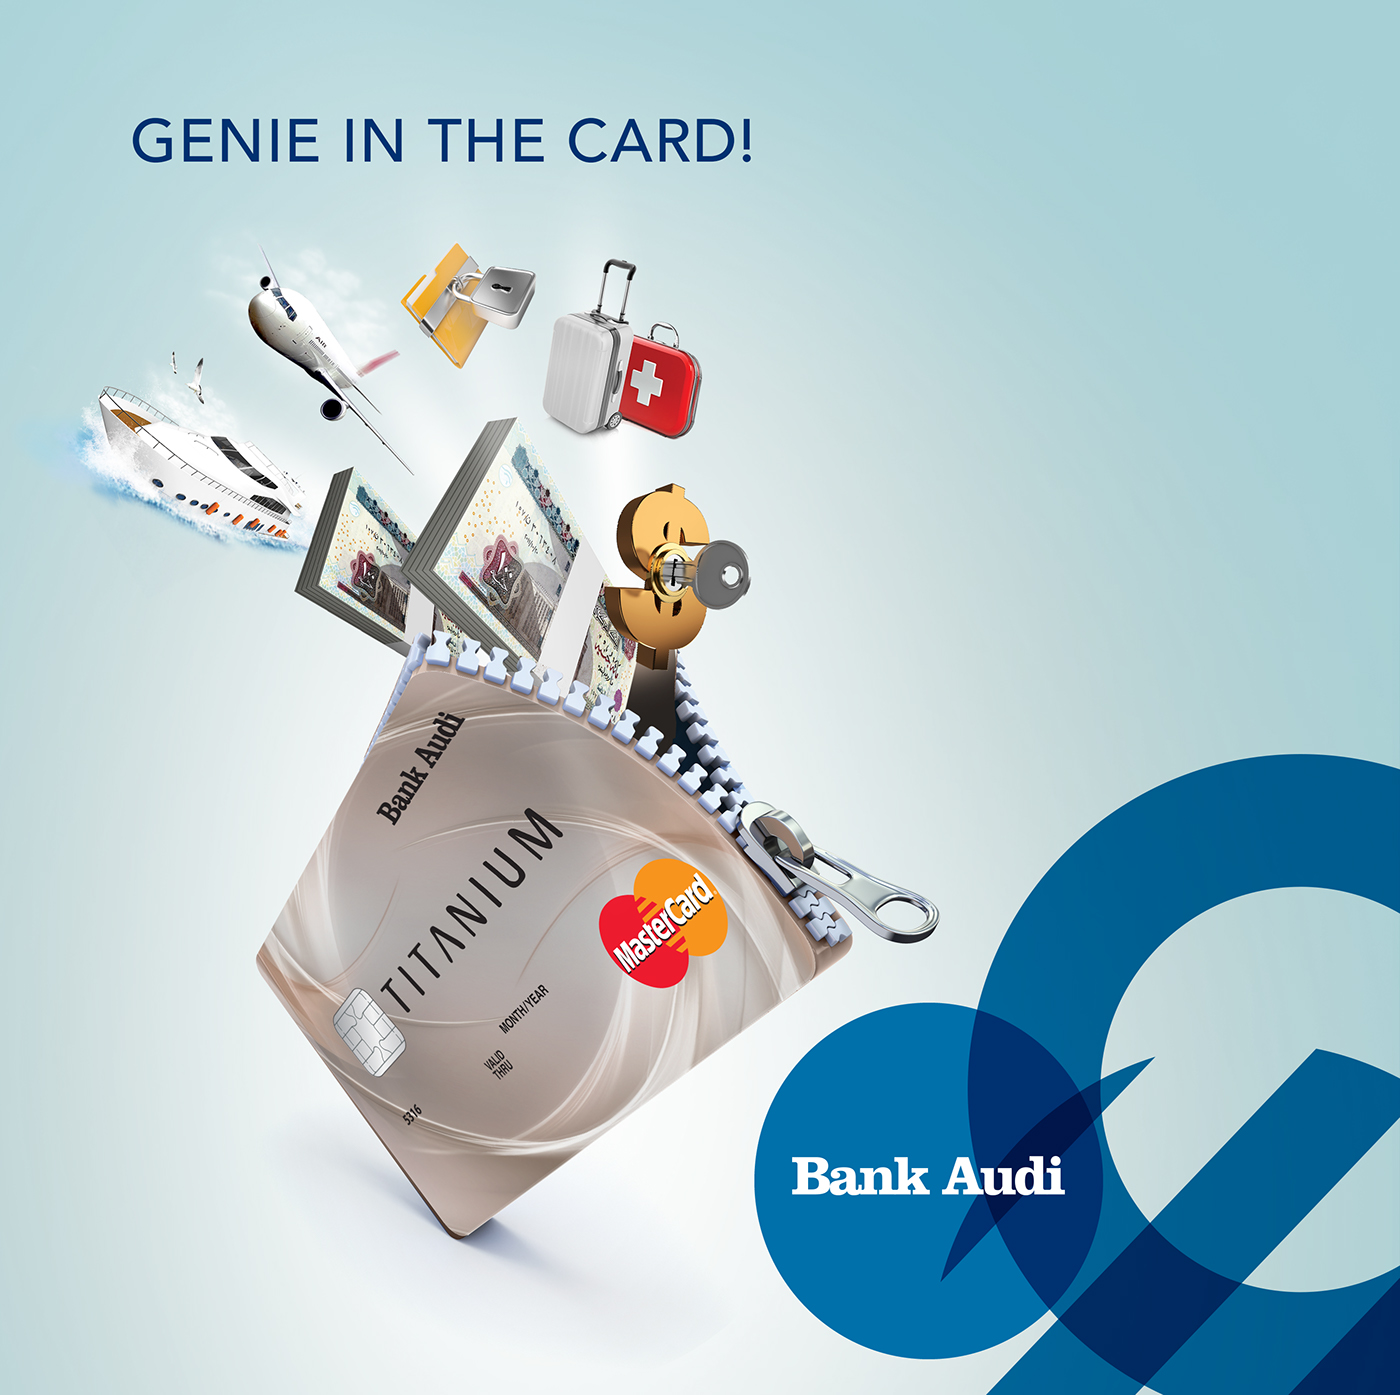 Titanuim card banking poster cairo egypt Visa Bank Audi 